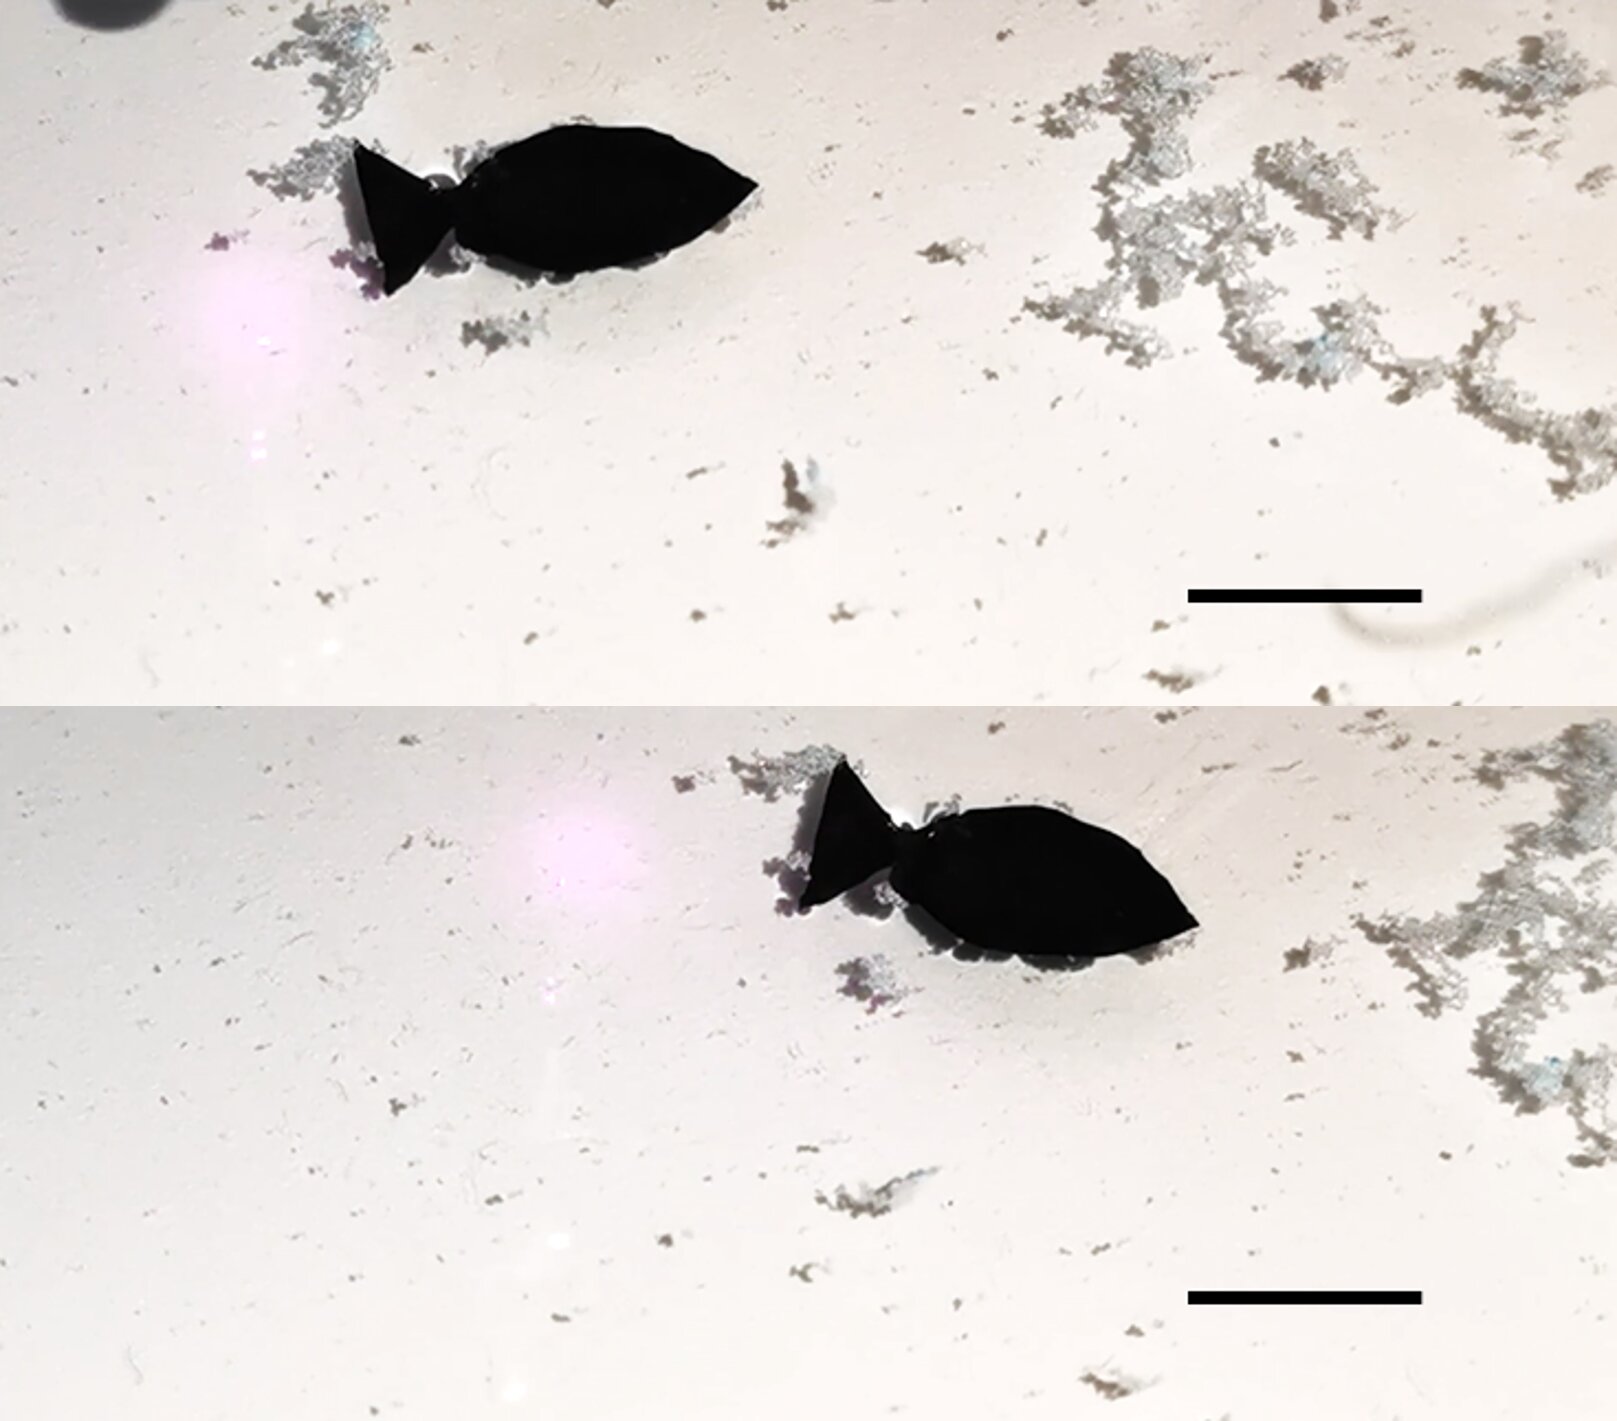 Tiny fish-shaped robot 'swims' around picking up microplastics